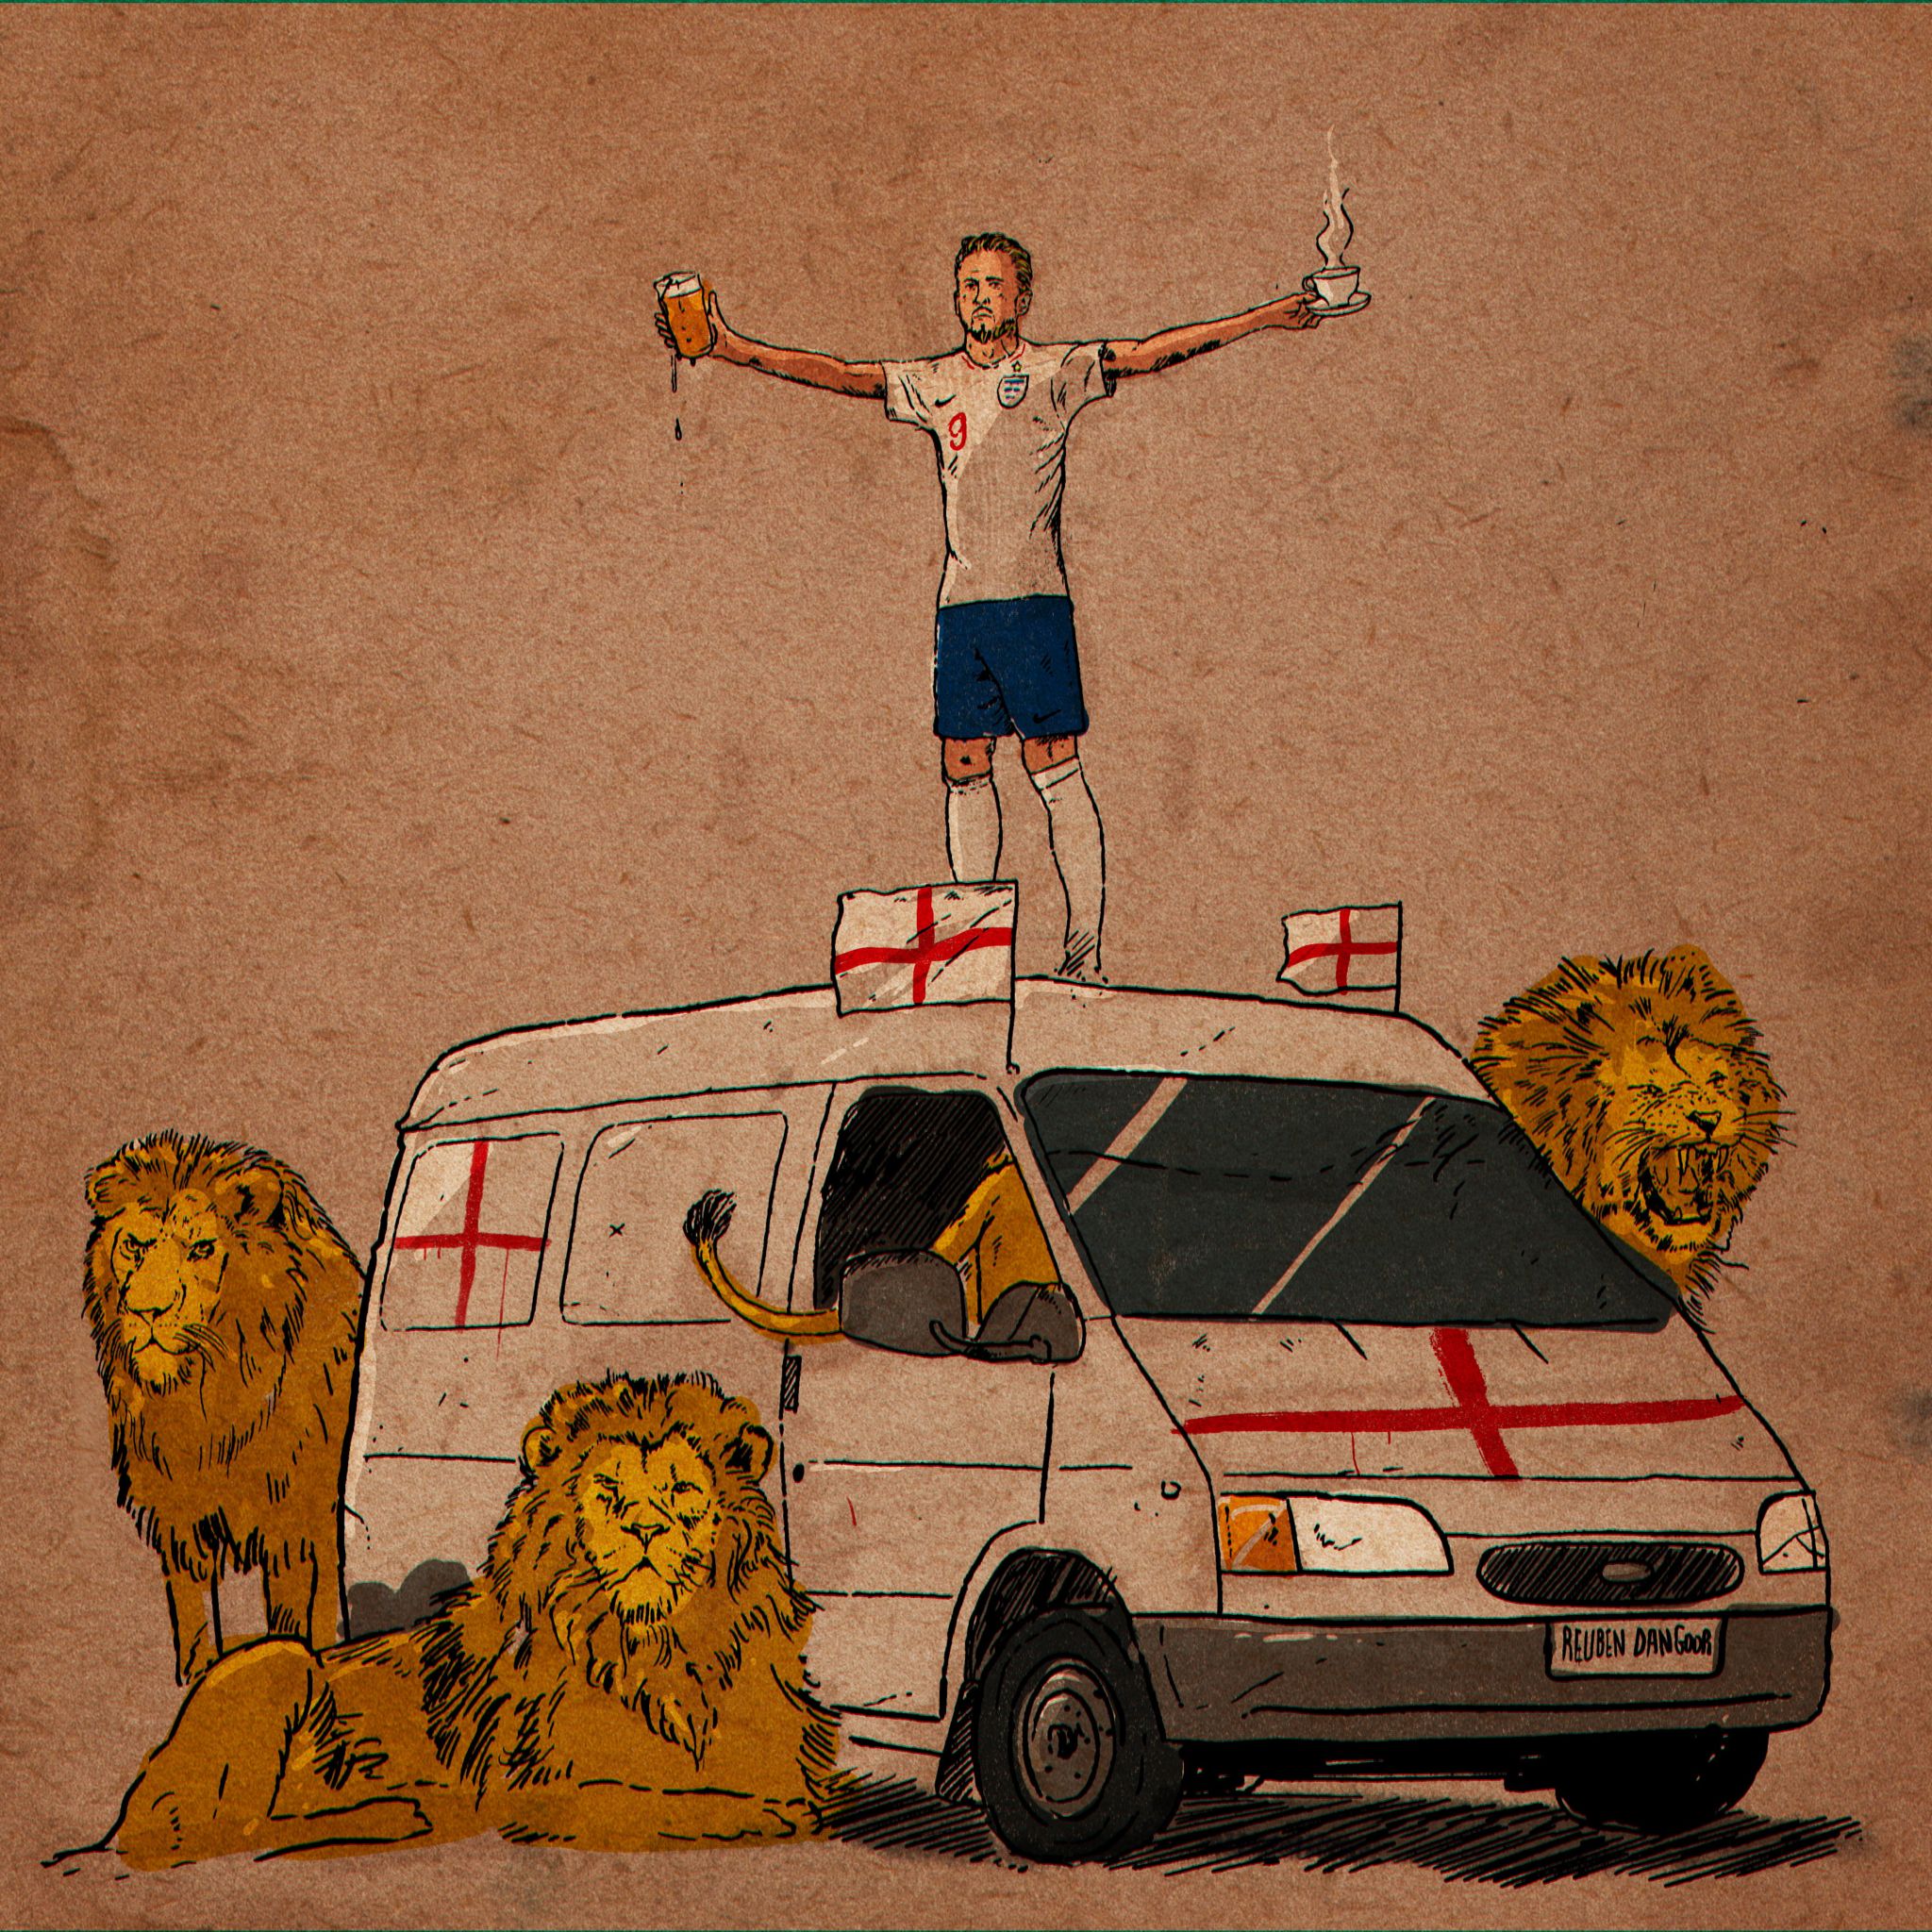 Harry Kane celebrating on top of a white van